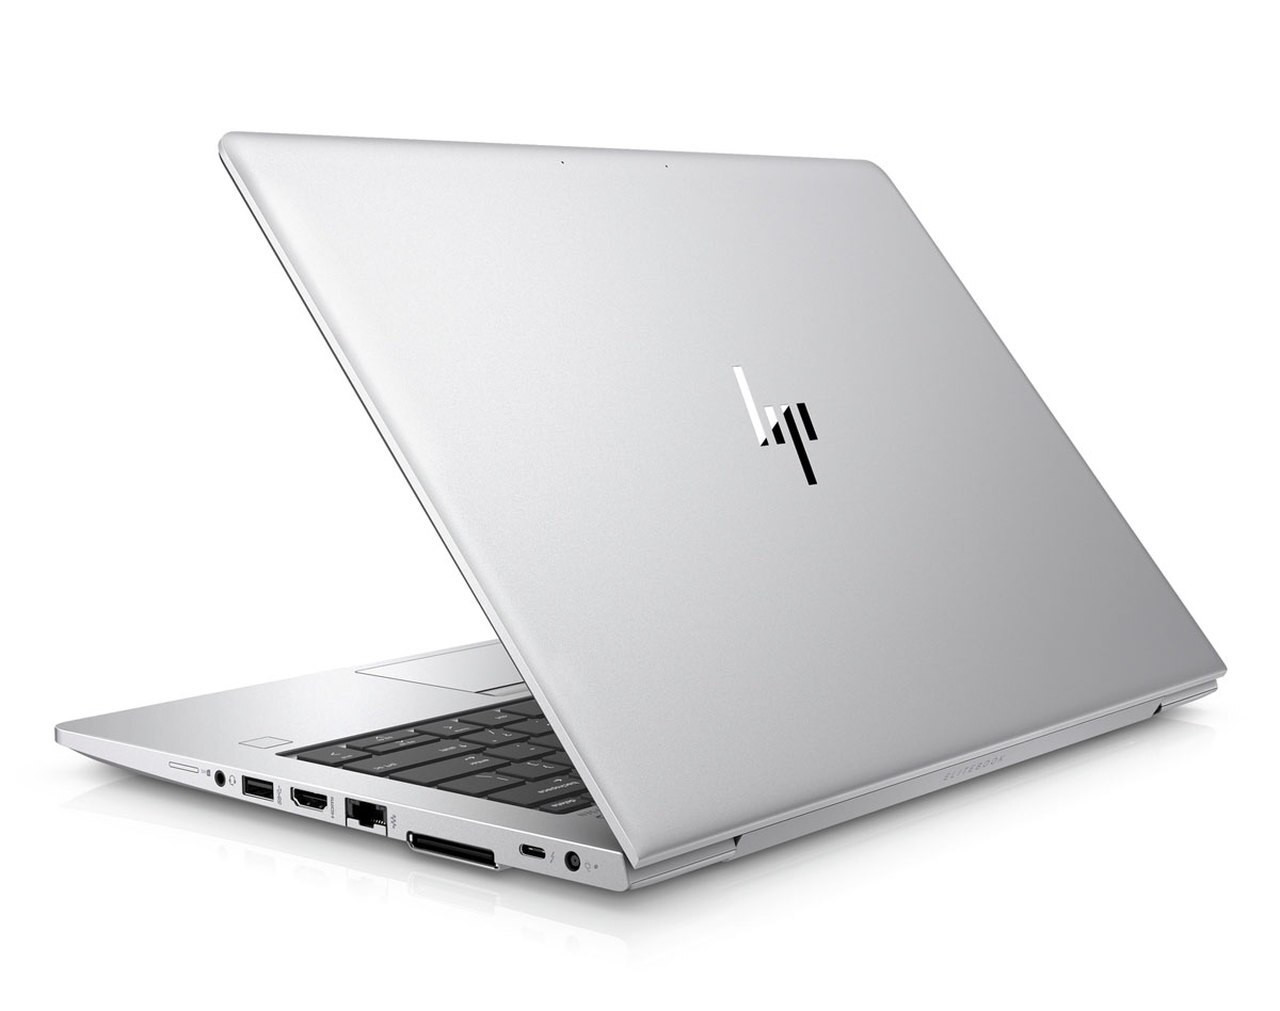 HP Elitebook 830 G5 13.3" Laptop Intel Core i5 1.90 GHz 16GB 256 GB SSD W10P | Refurbished